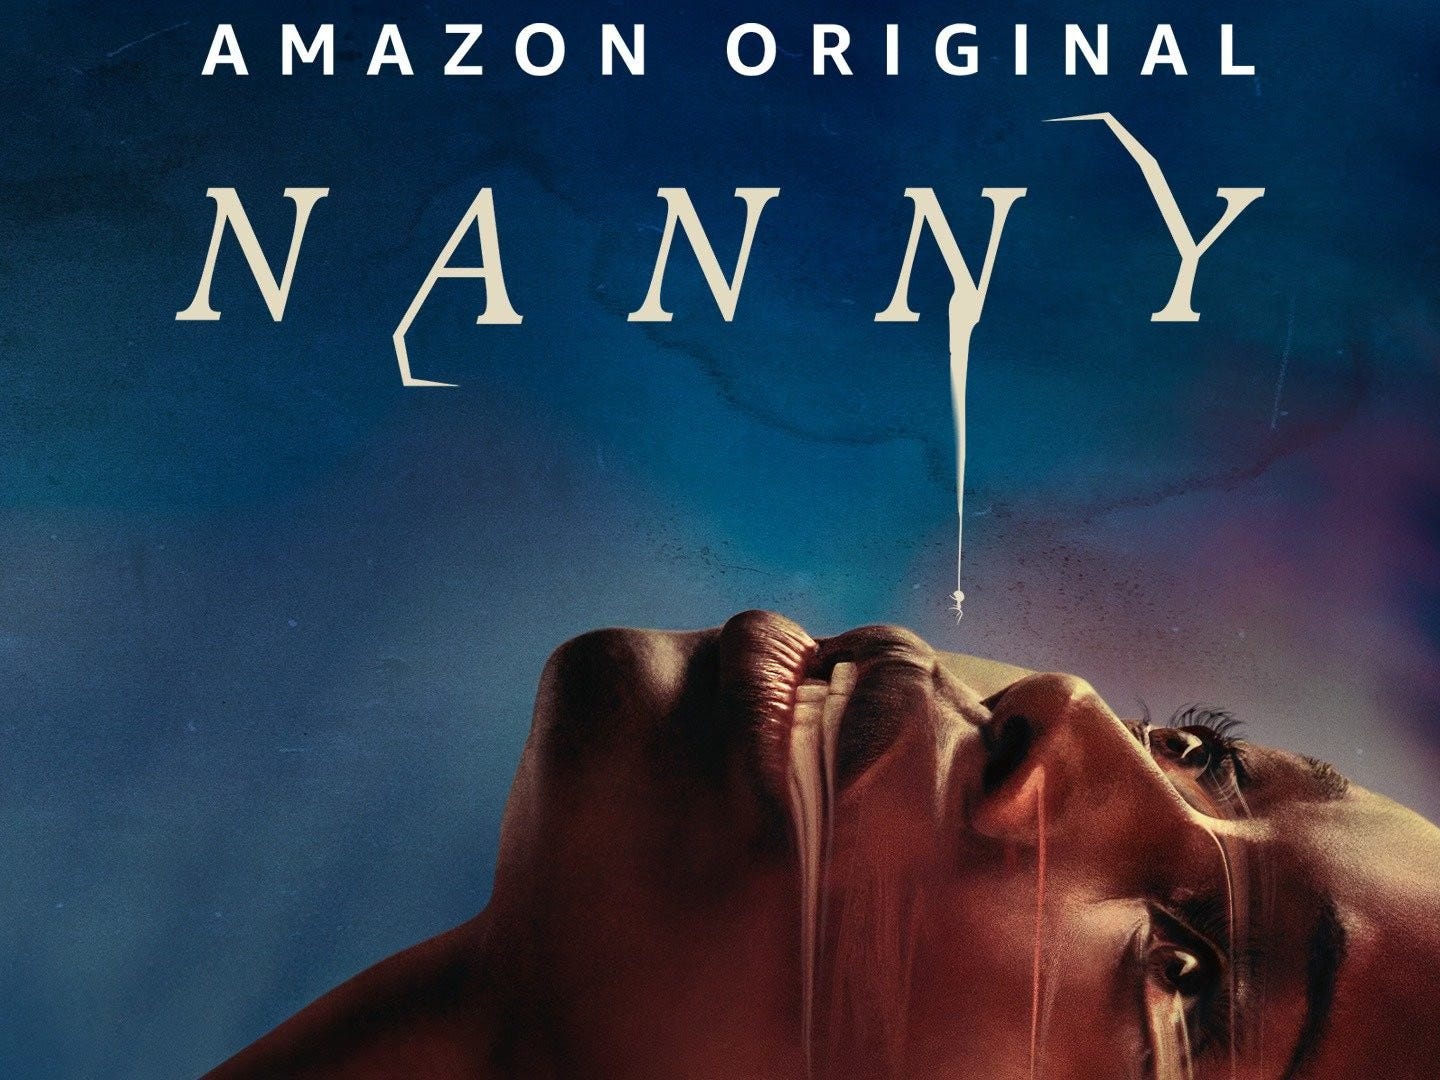 Amazon Original Nanny poster